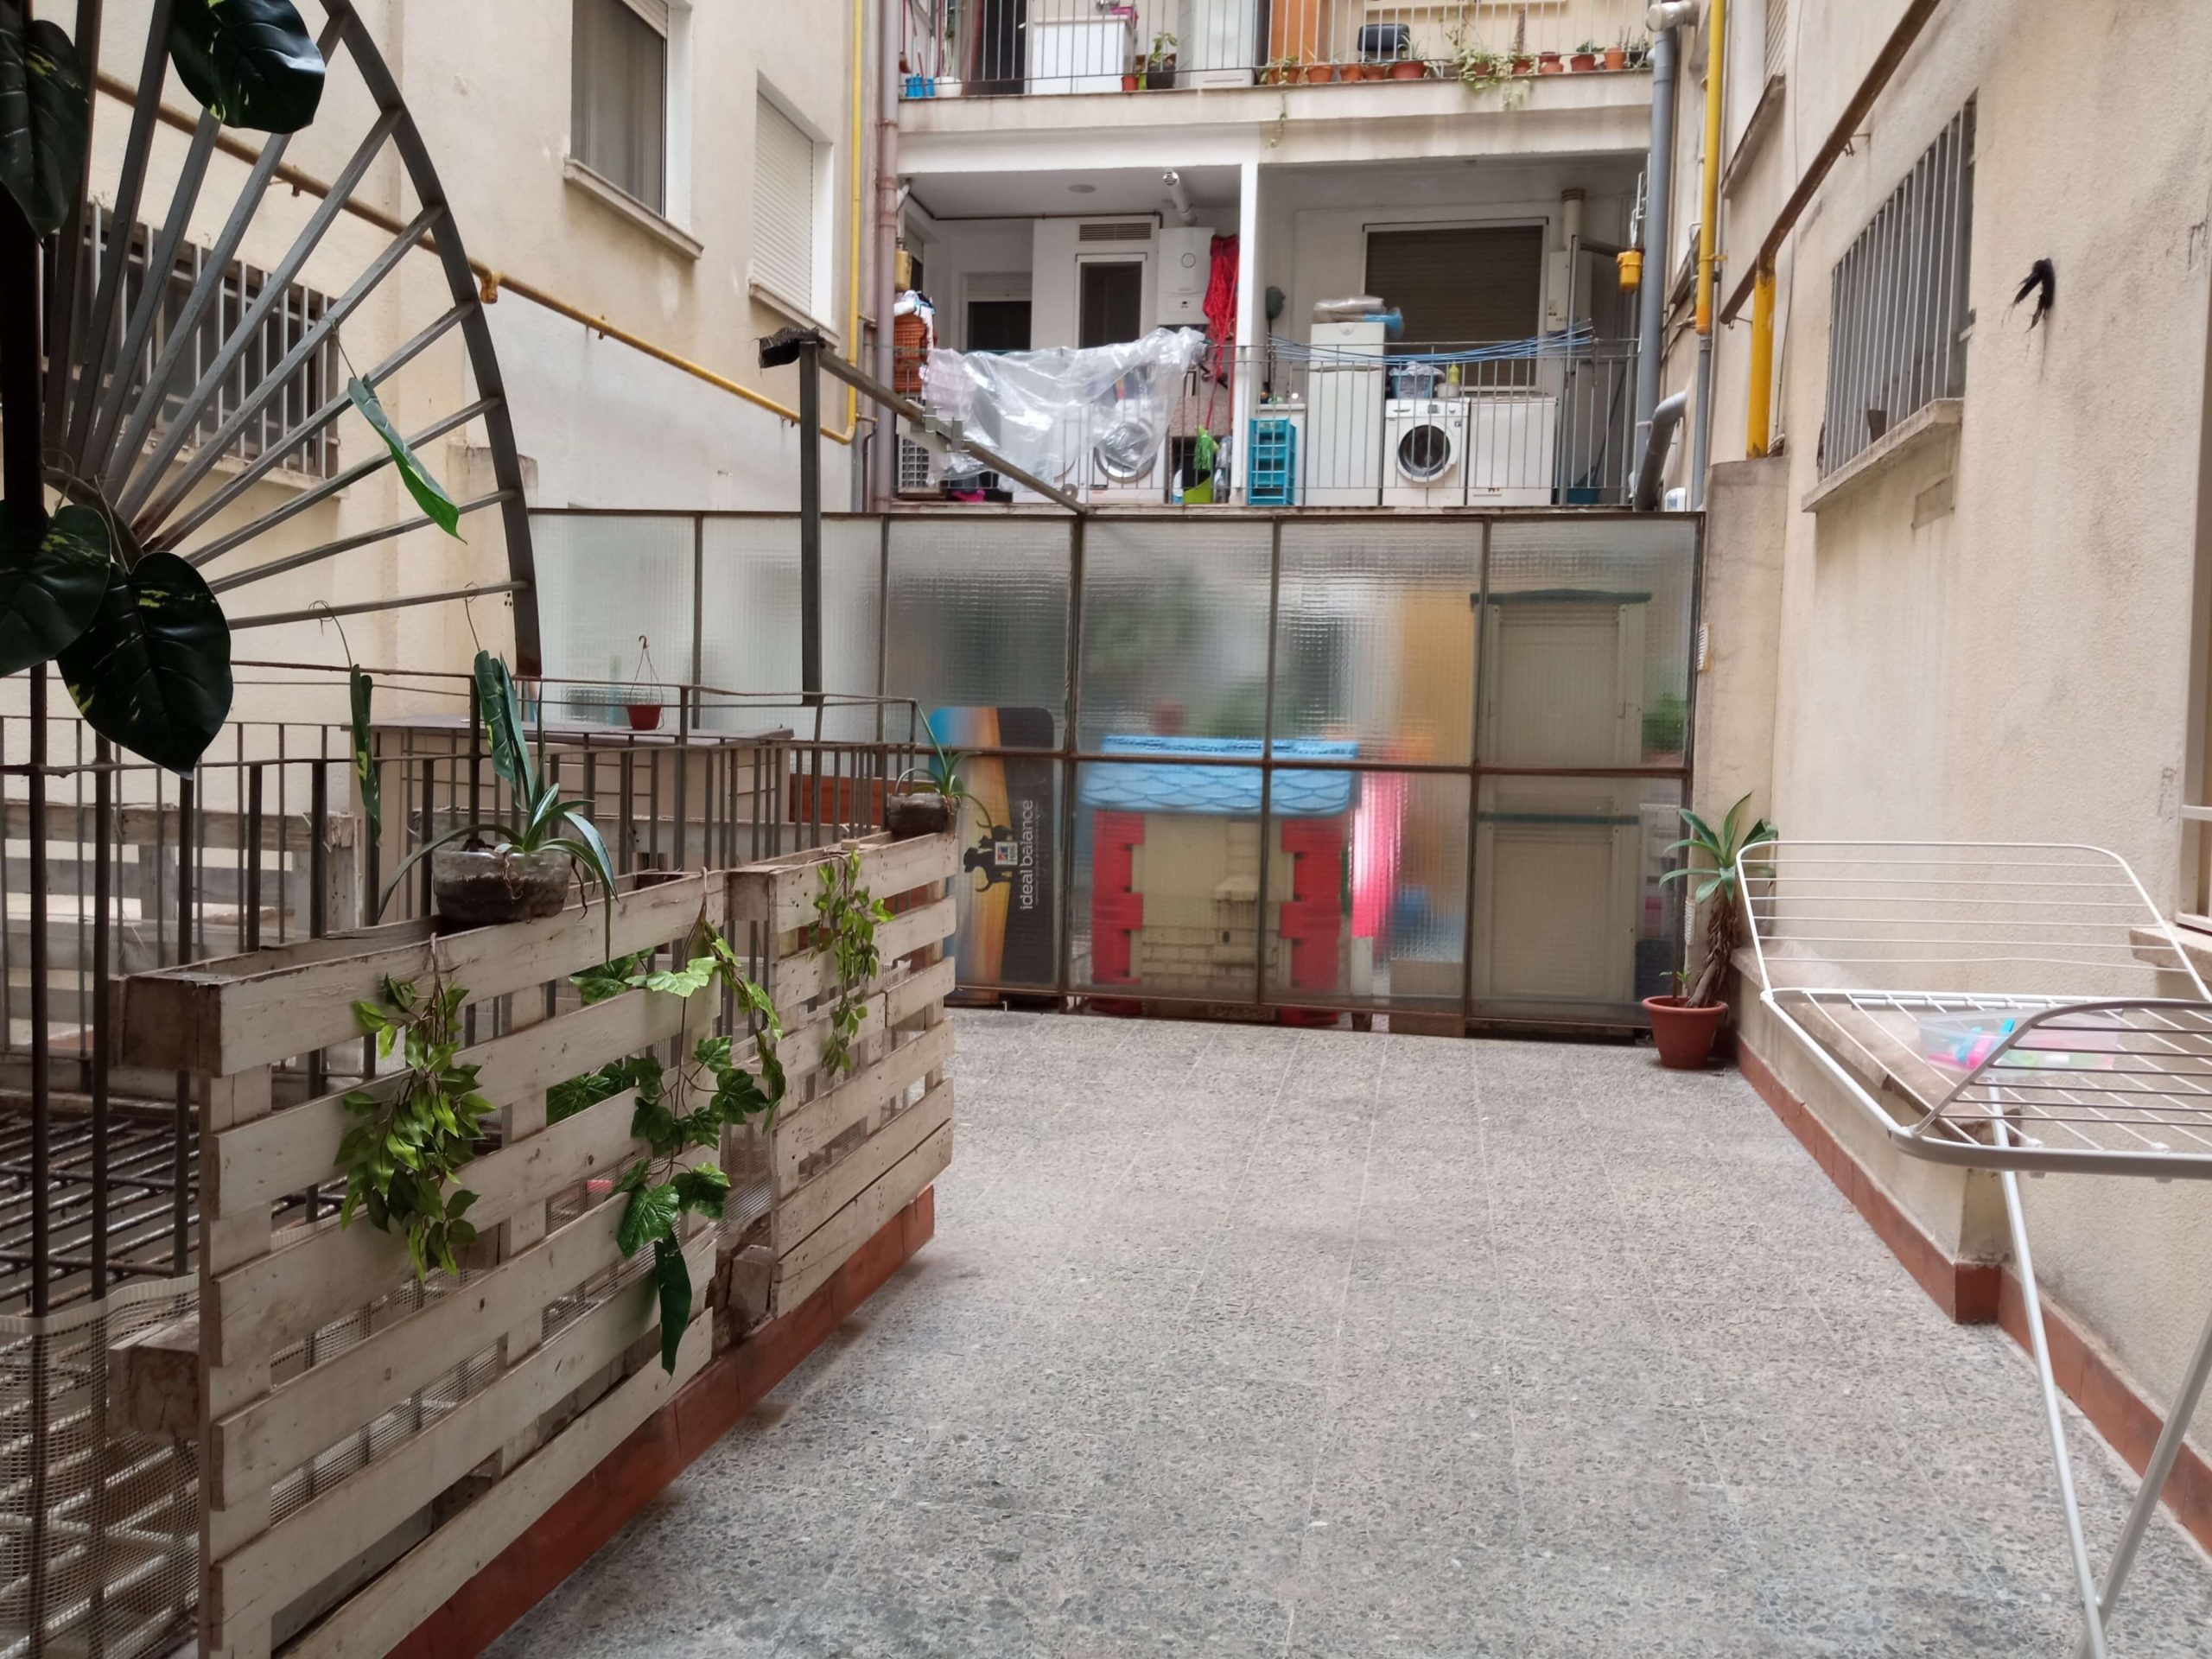 terrace apartment for rent in valencia, guillen